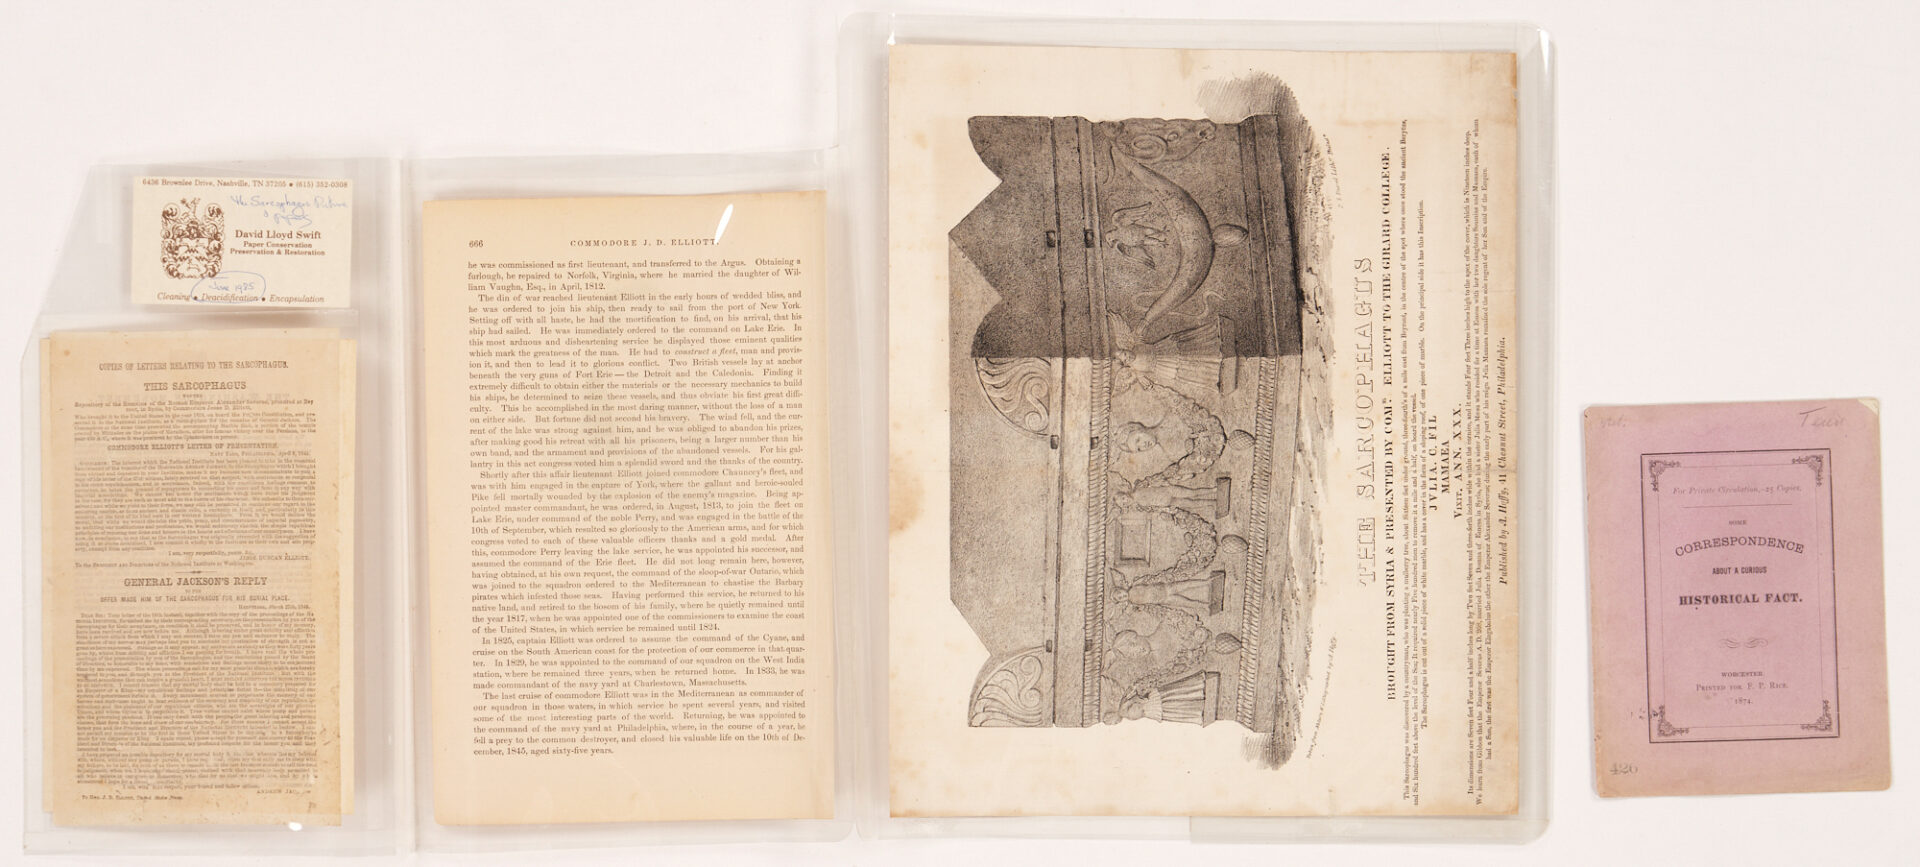 Lot 882: Cdre. Jesse D. Elliott ALS plus Andrew Jackson related Sarcophagus Print